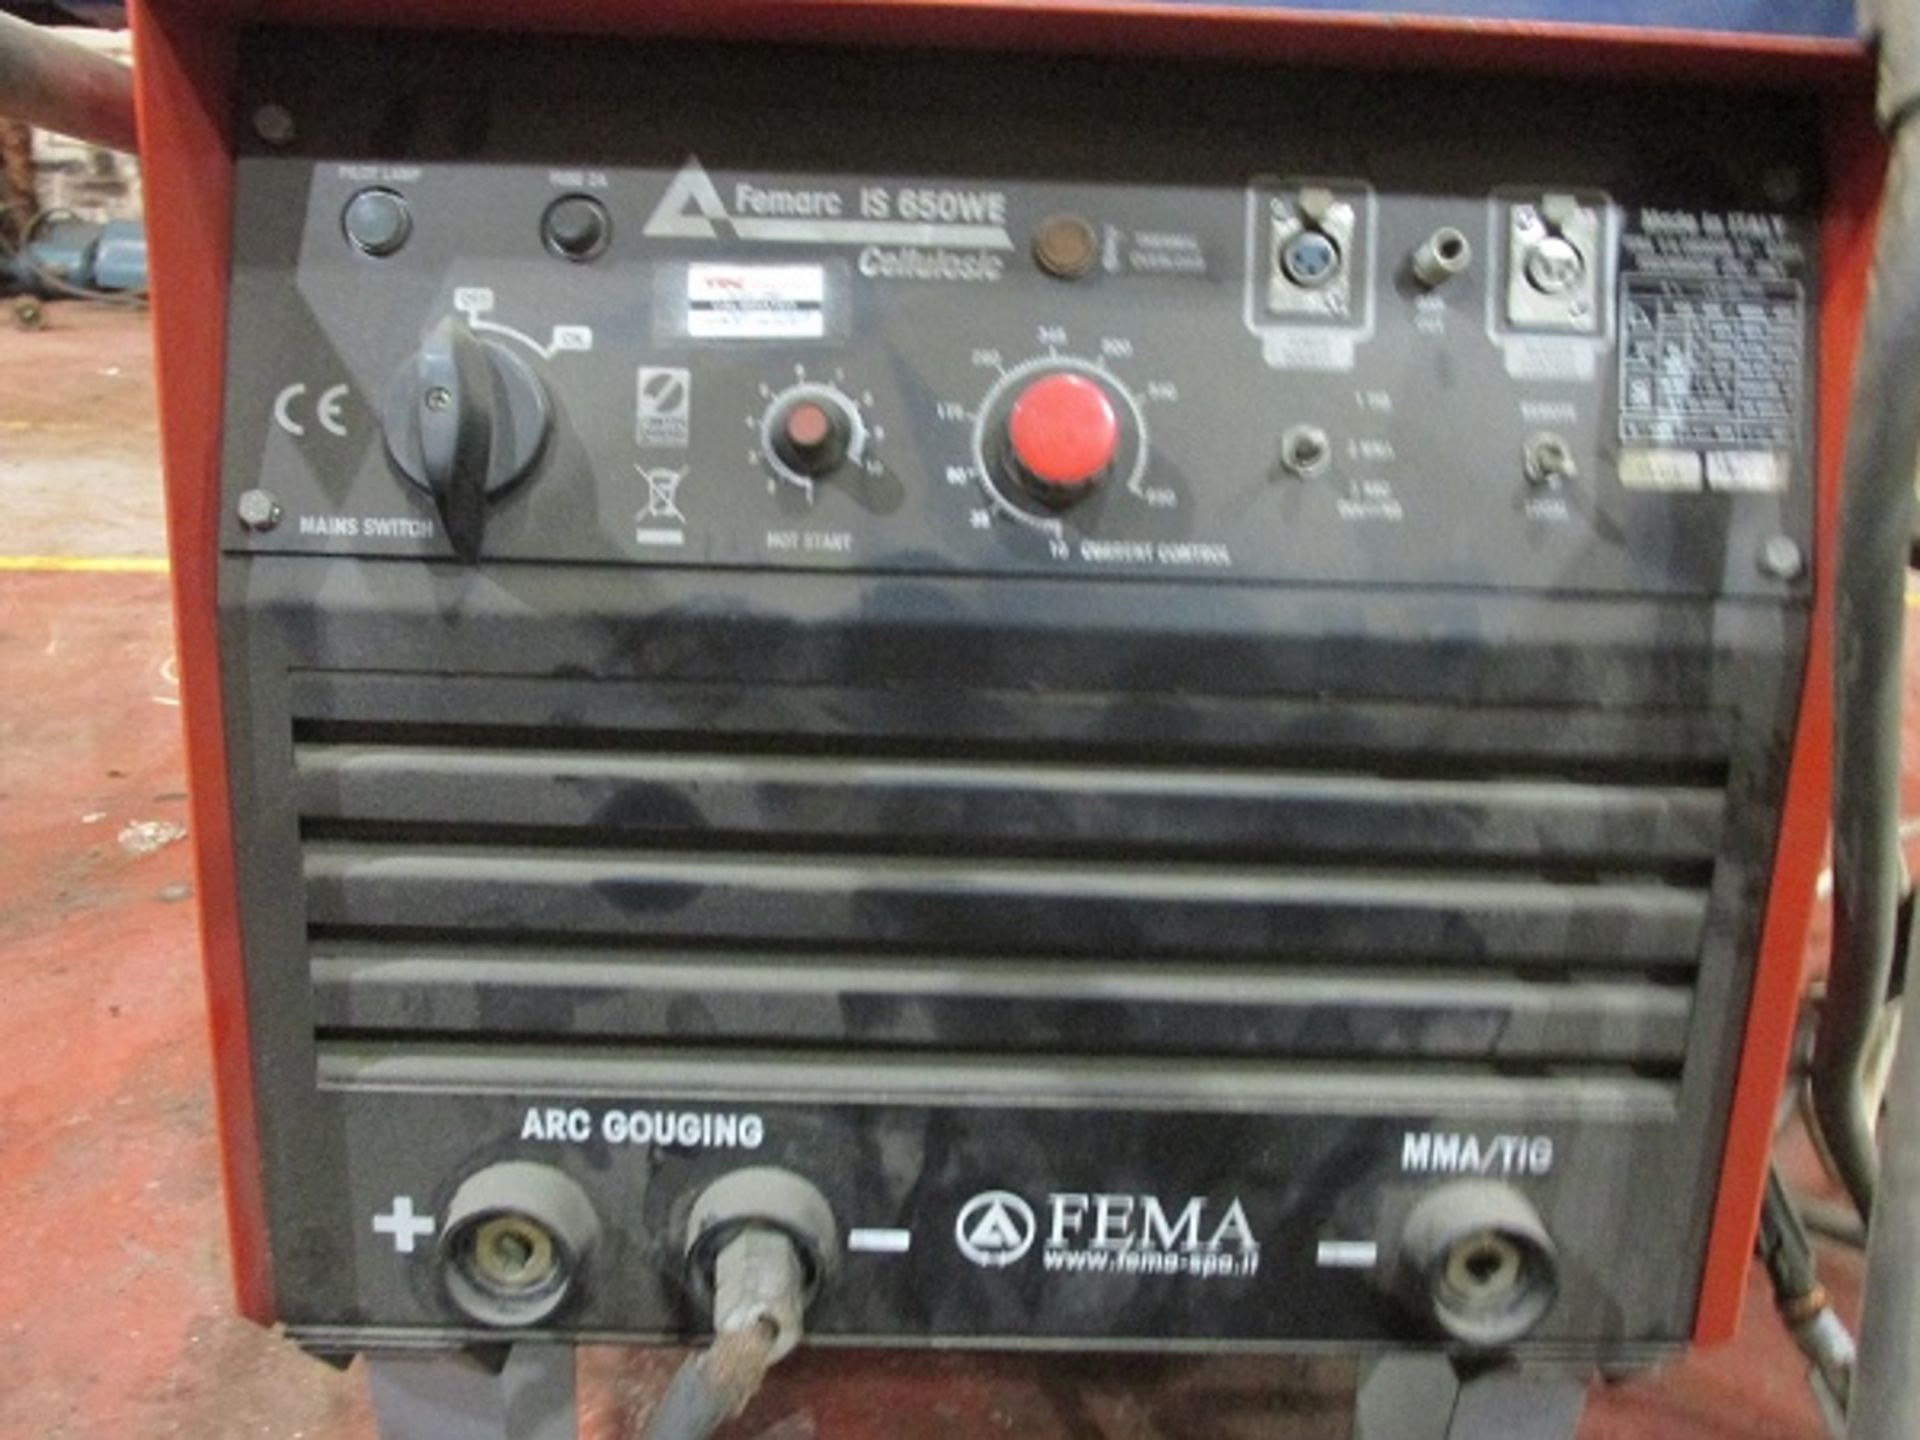 FEMA FERMAC IS 650 WE Cellulosic Welder - Image 3 of 4